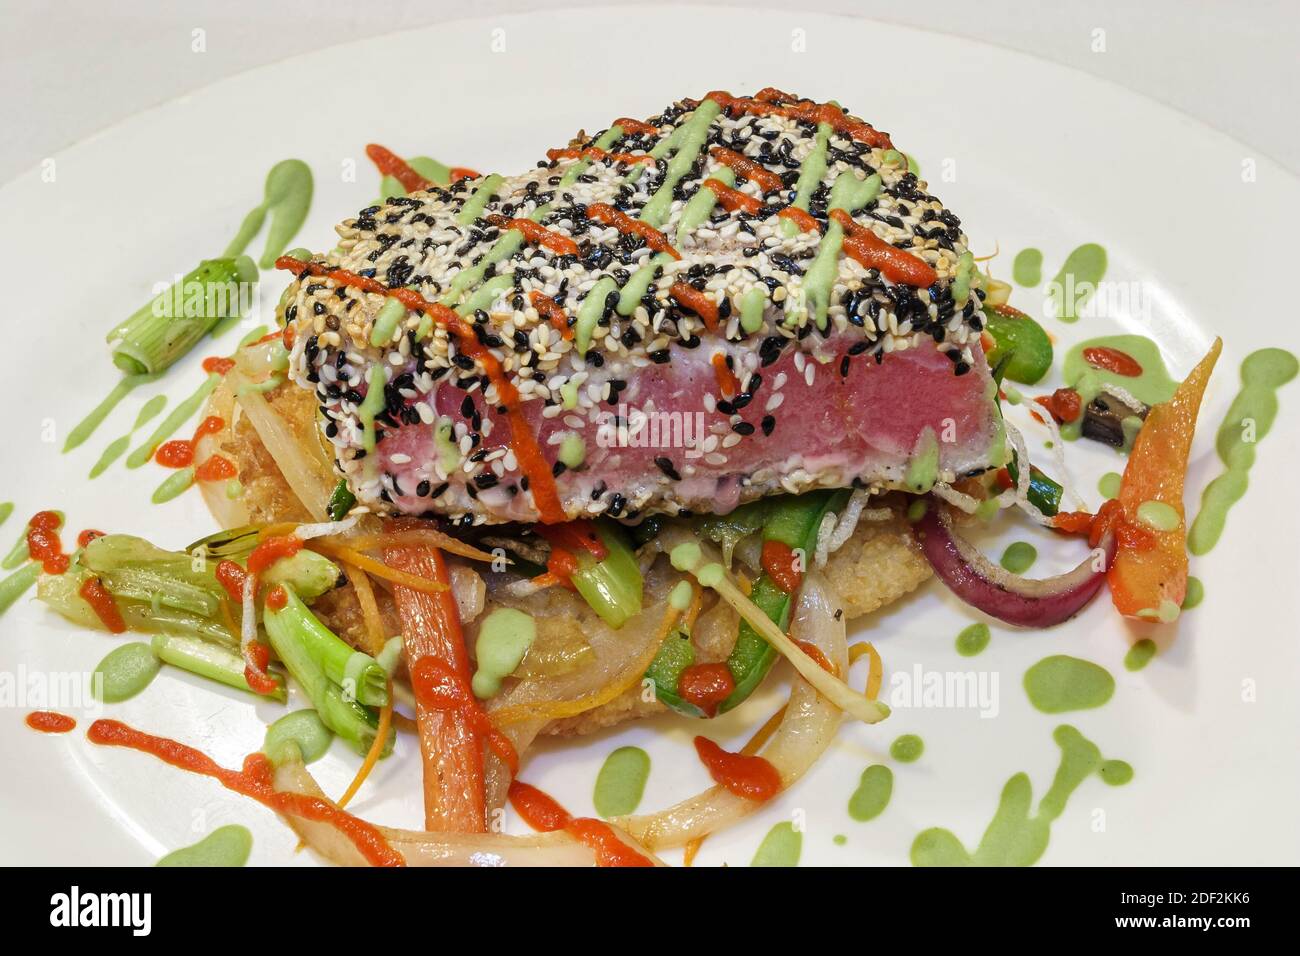 Huntsville Alabama,Jazz Factory restaurant,rare seared tuna over fried sushi rice cake,Asian vegetables wasabi glaze,food plate display, Stock Photo